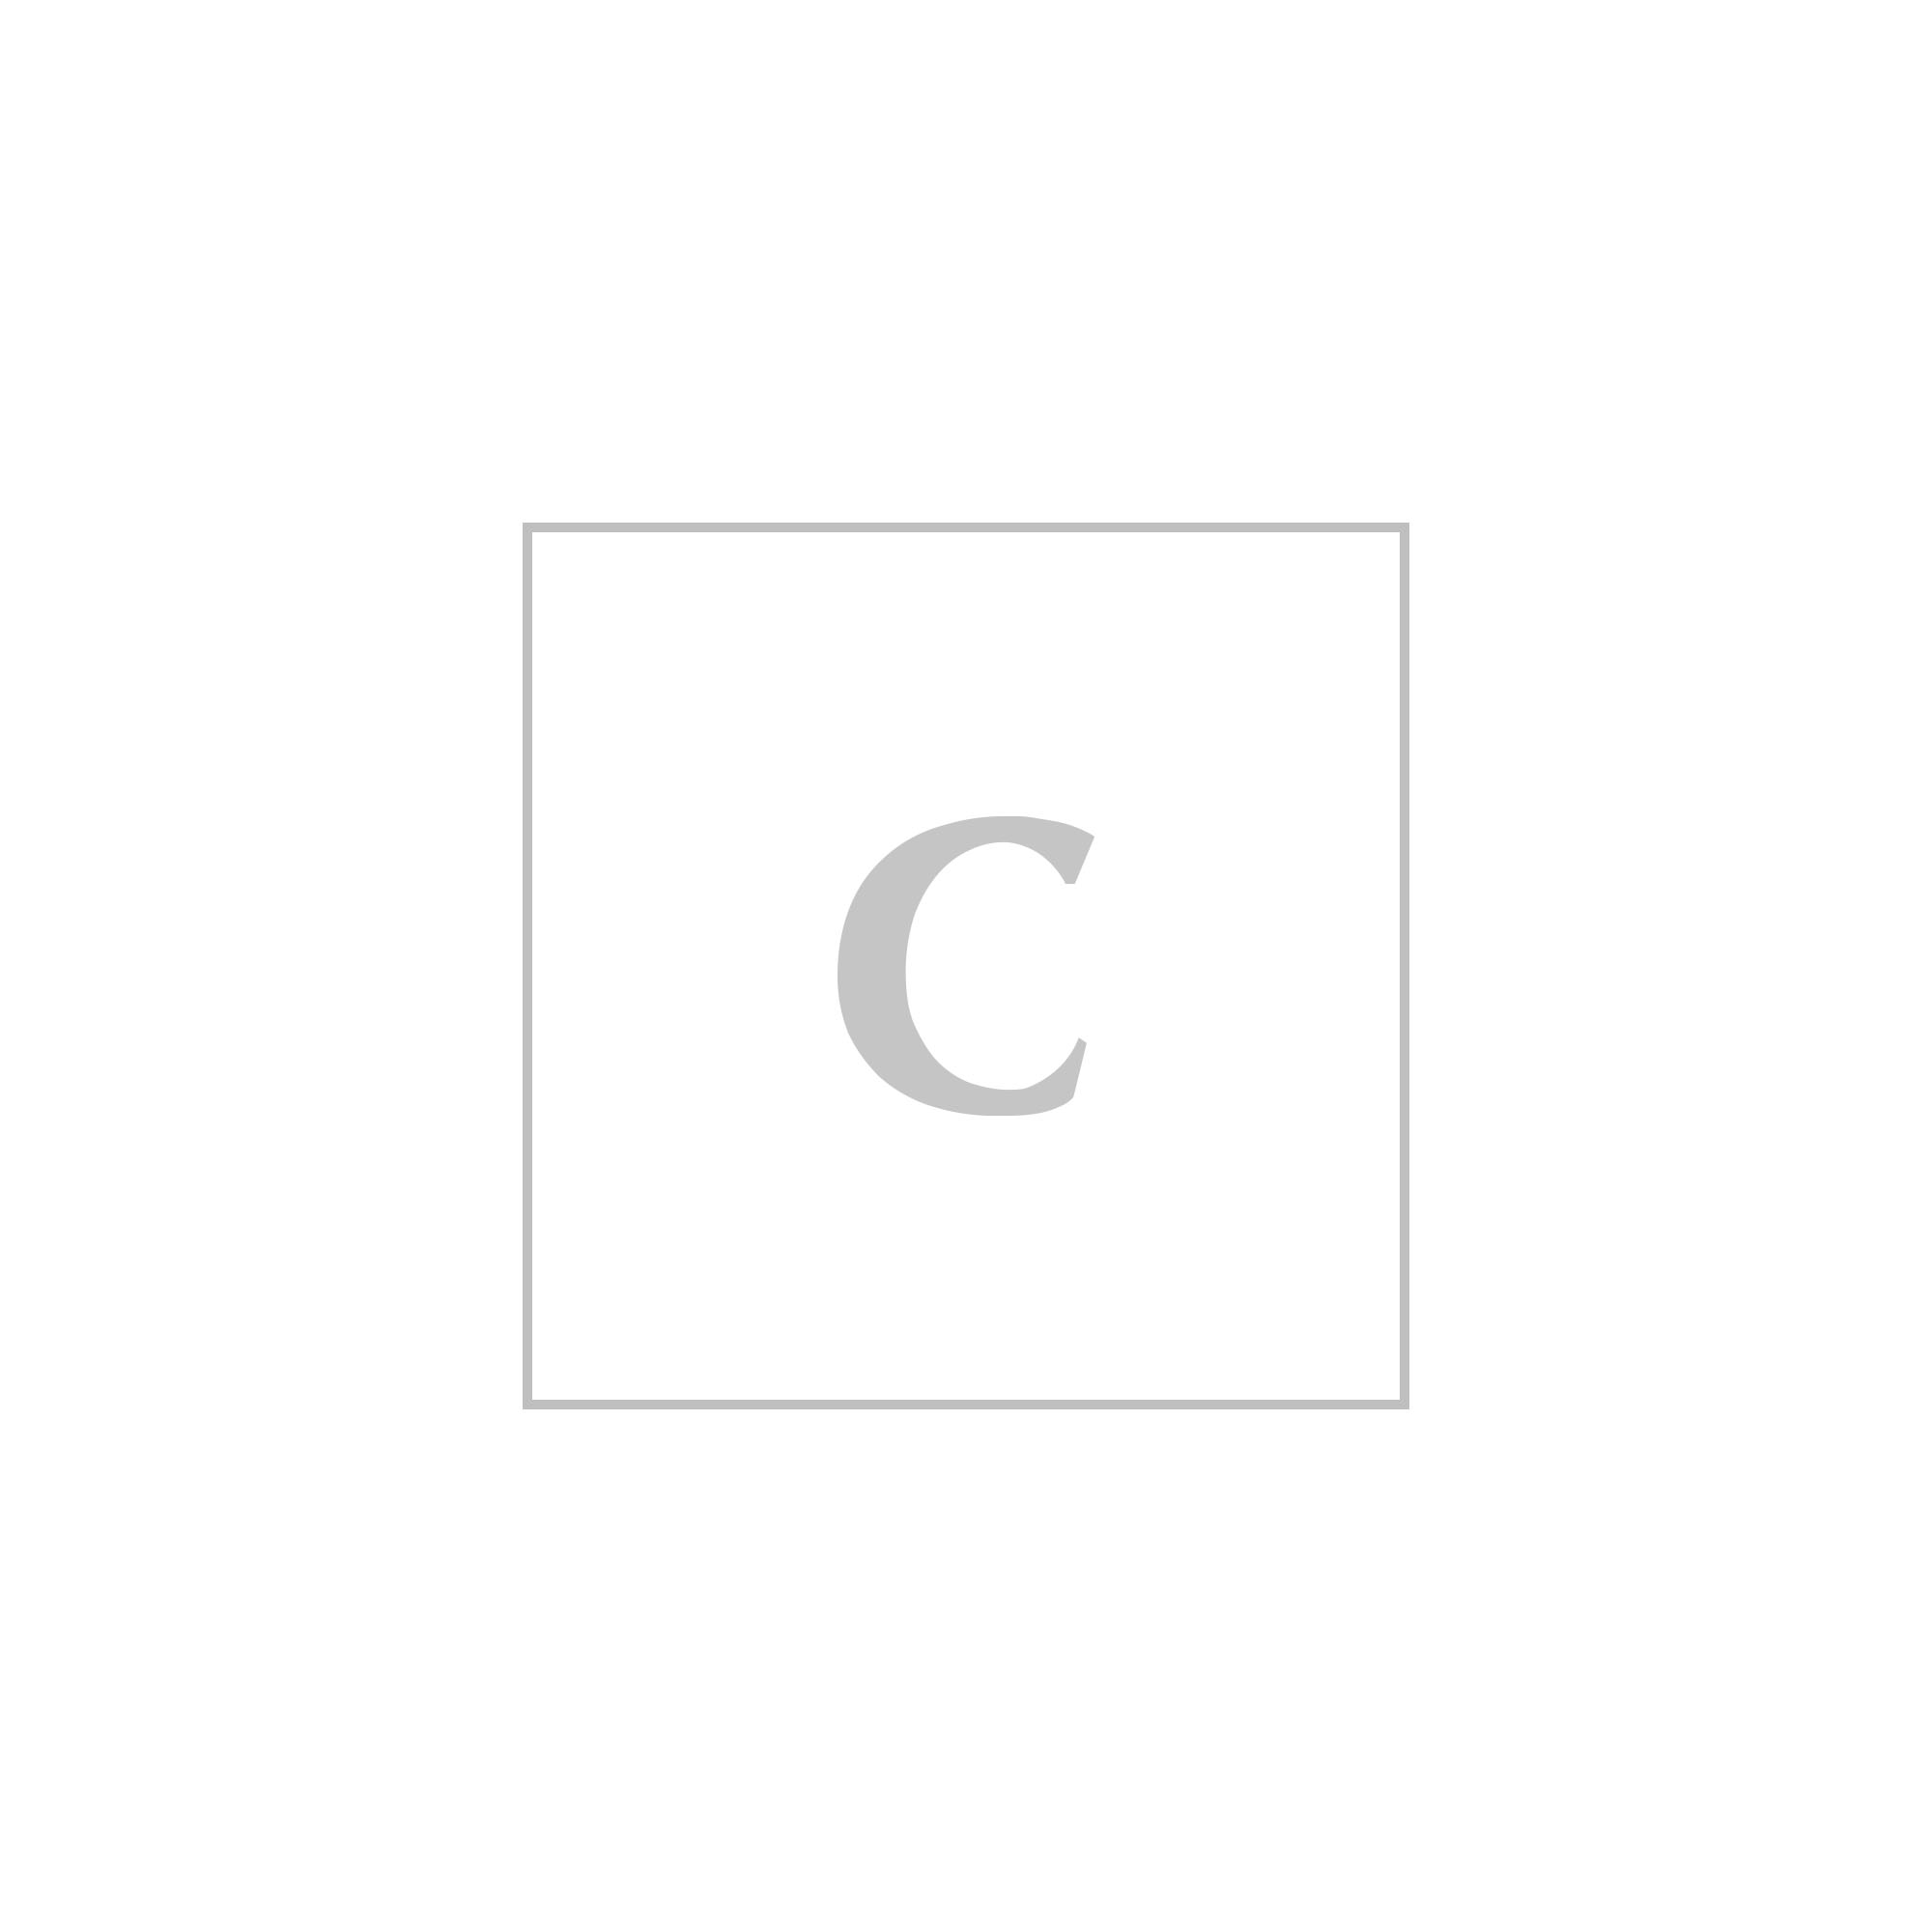 BURBERRY CAVENDISH CHECK WALLET,201481FPC000007-A7026